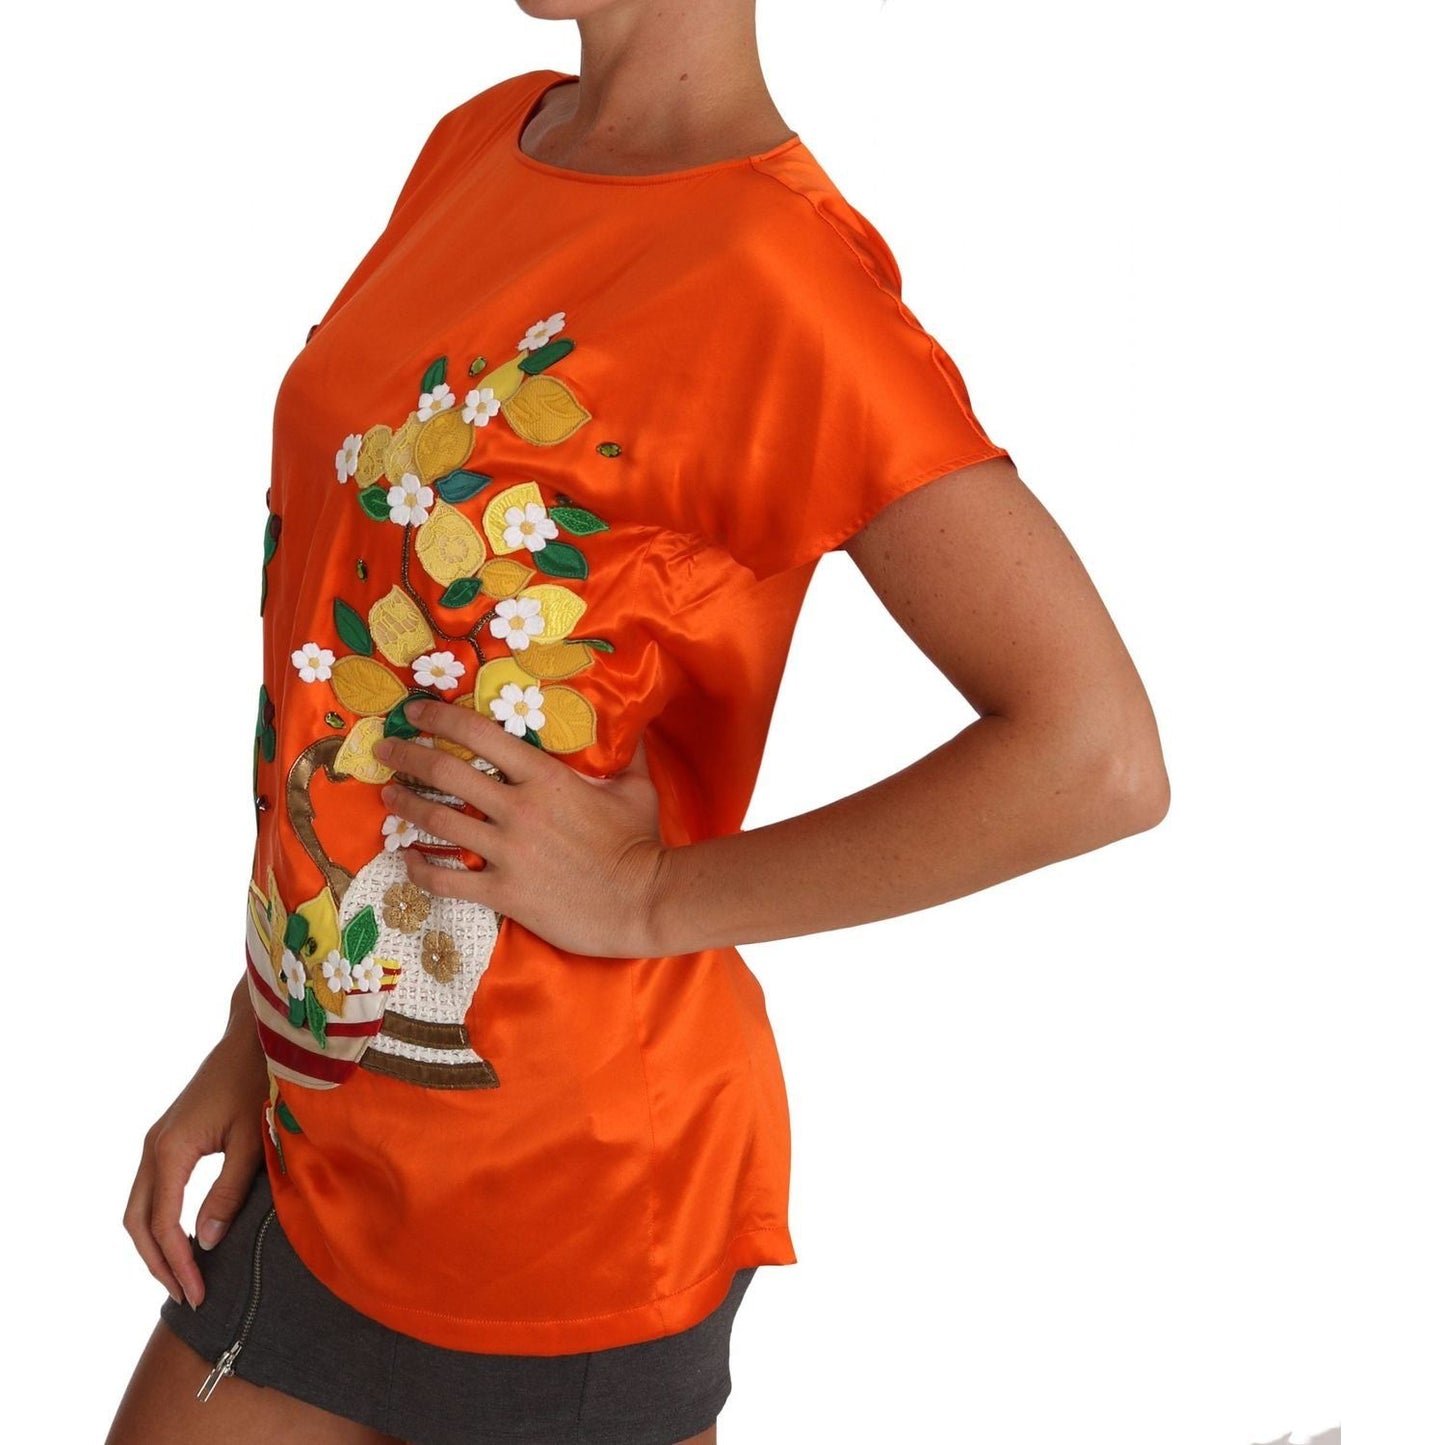 Dolce & Gabbana Sicilian Summer Silk Crystal-Embellished Top silk-orange-lemon-crystal-t-shirt-top 643644-silk-orange-lemon-crystal-t-shirt-top-3.jpg